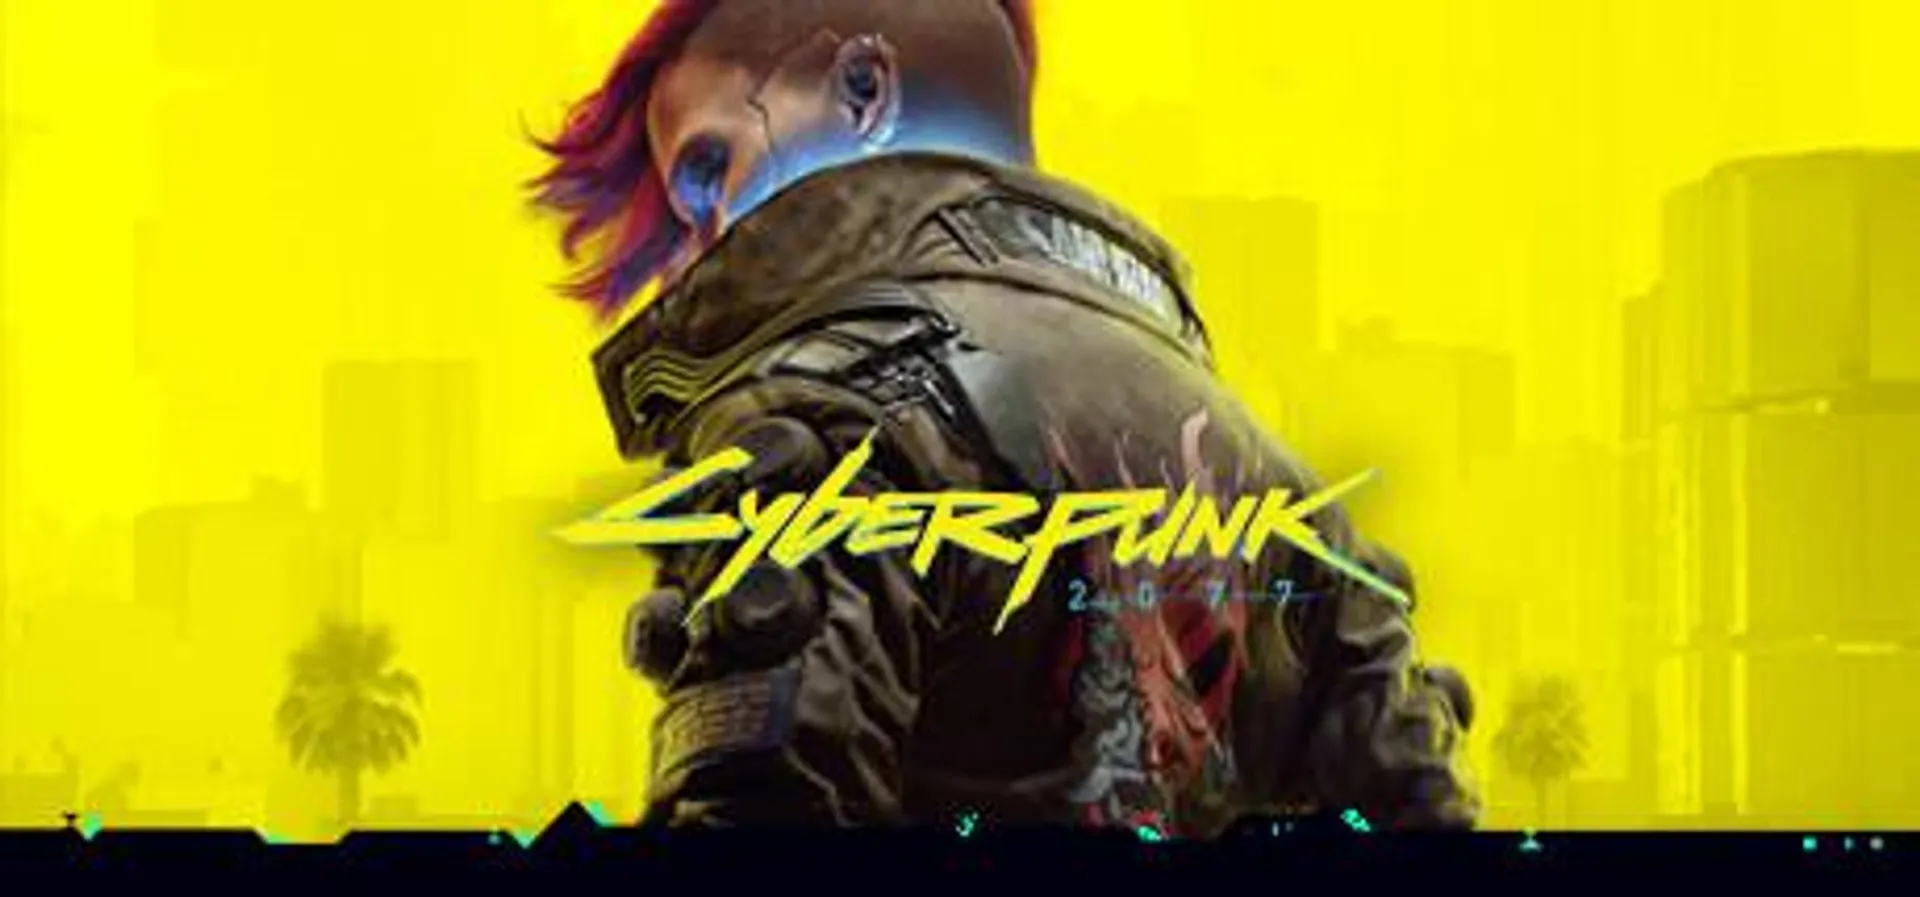 Save 50% on Cyberpunk 2077 on Steam